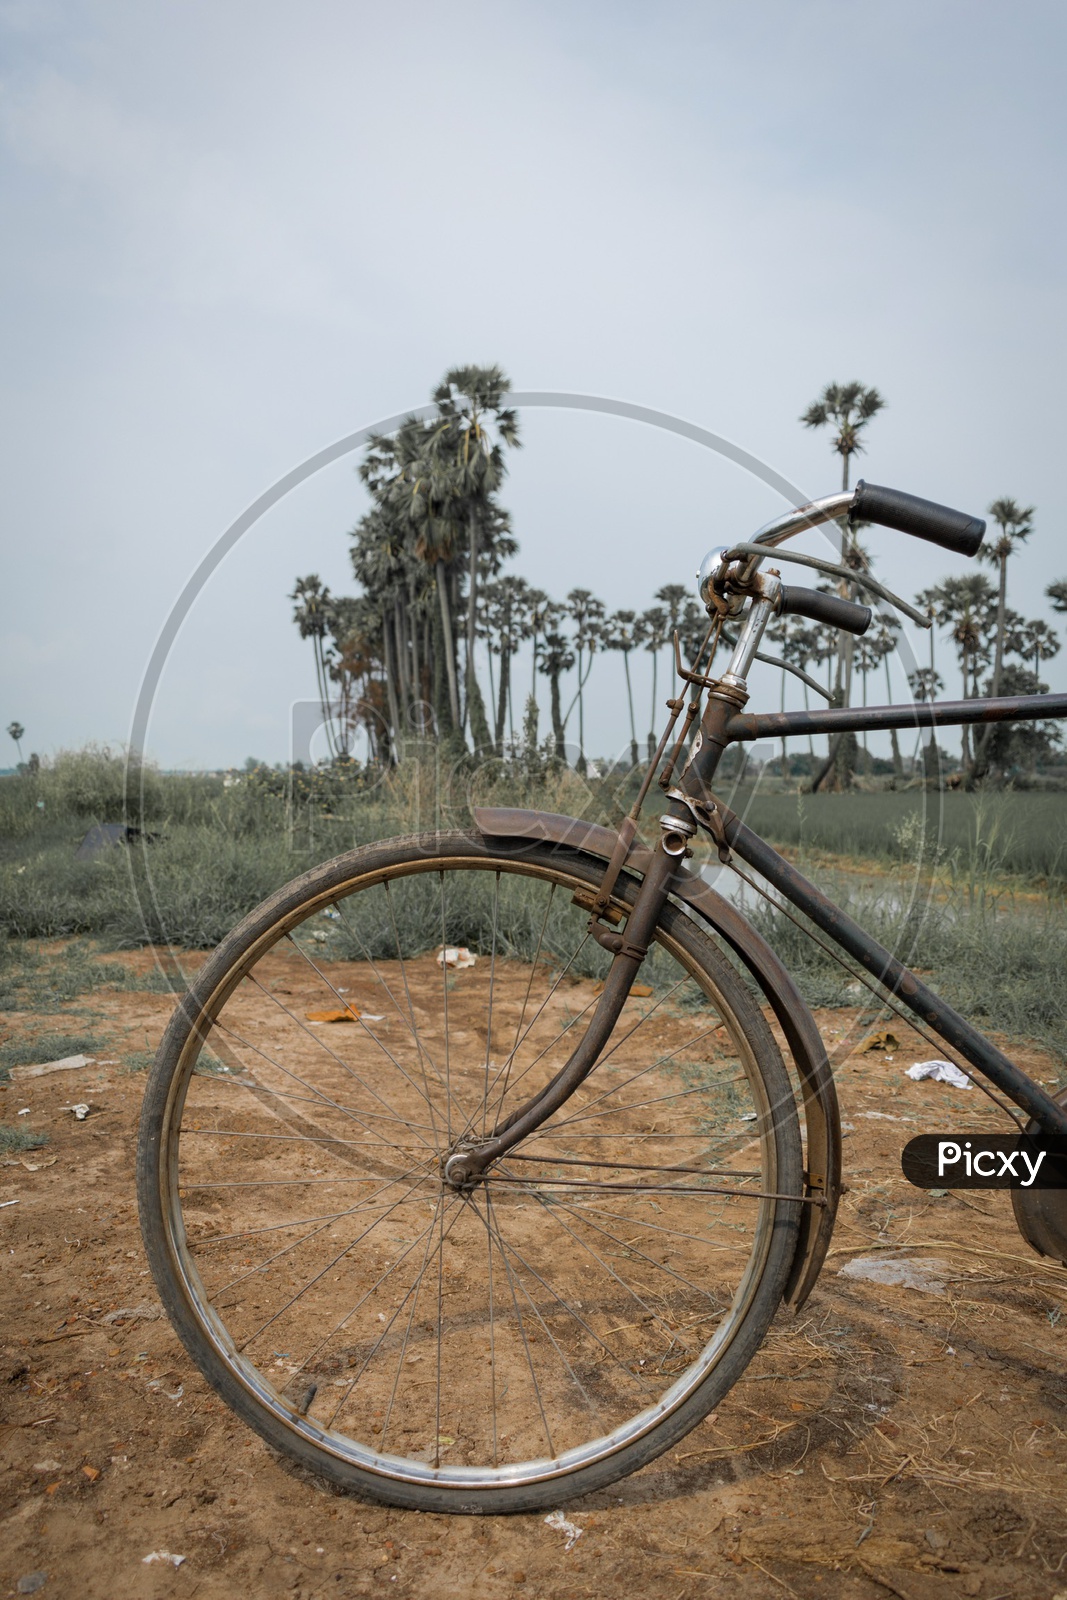 Old vintage bicycle in a village